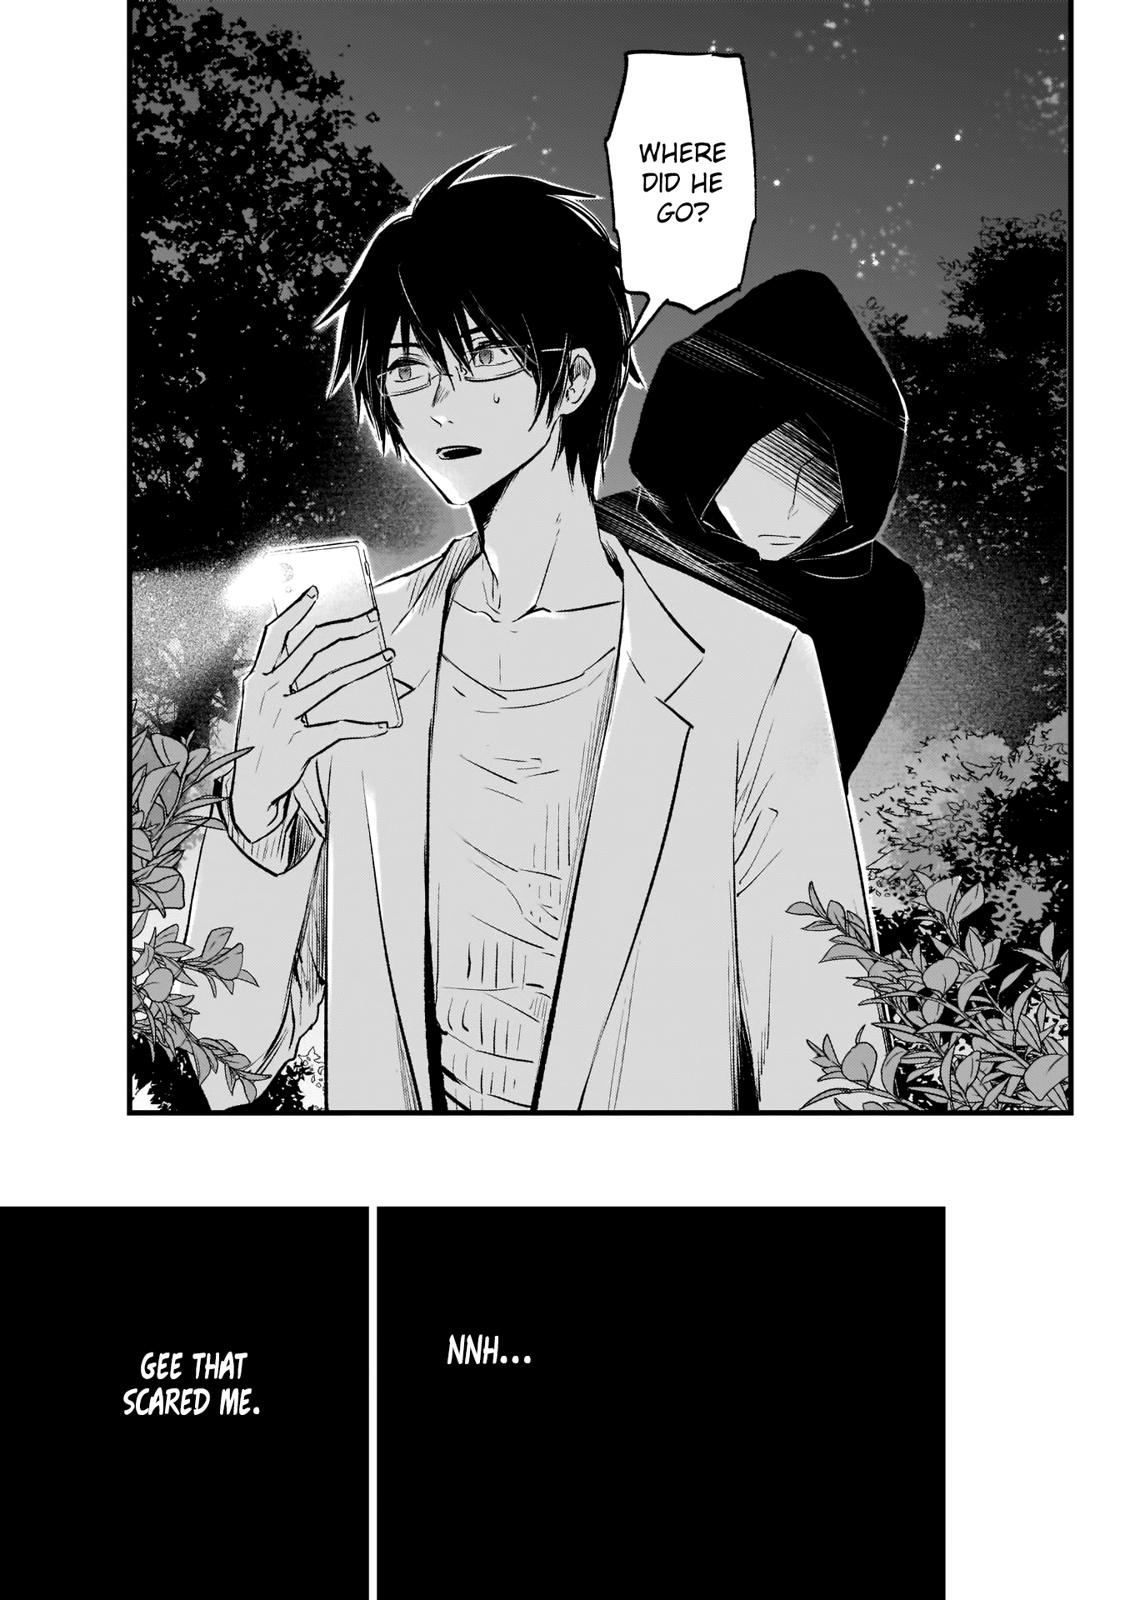 Oshi No Ko Manga Manga Chapter - 1 - image 35